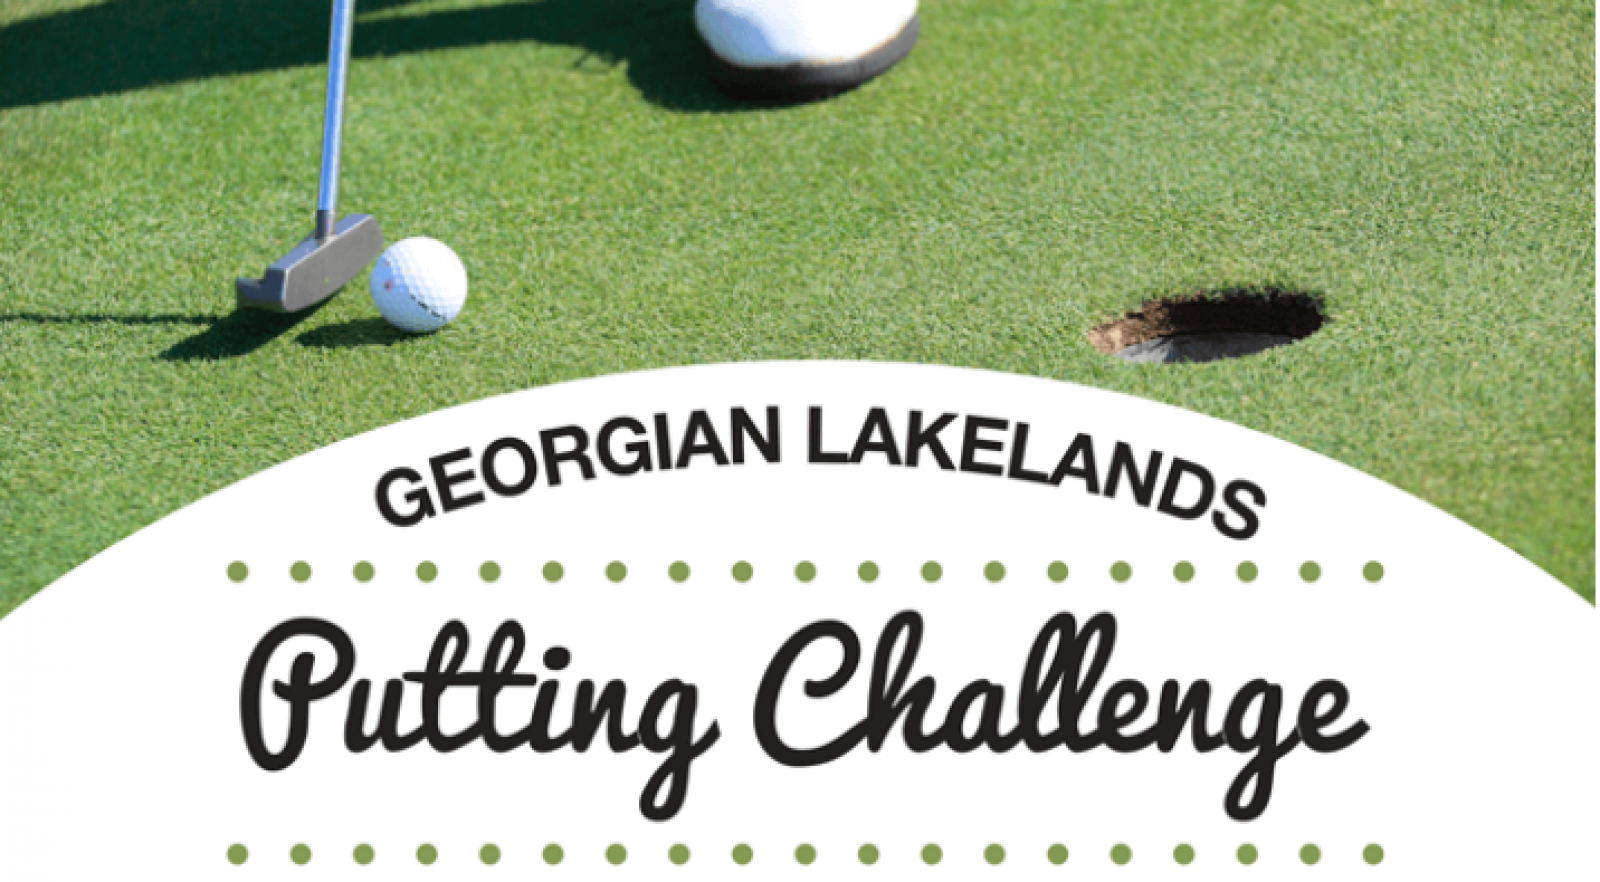 Georgian Lakelands Chapter Putting Challenge